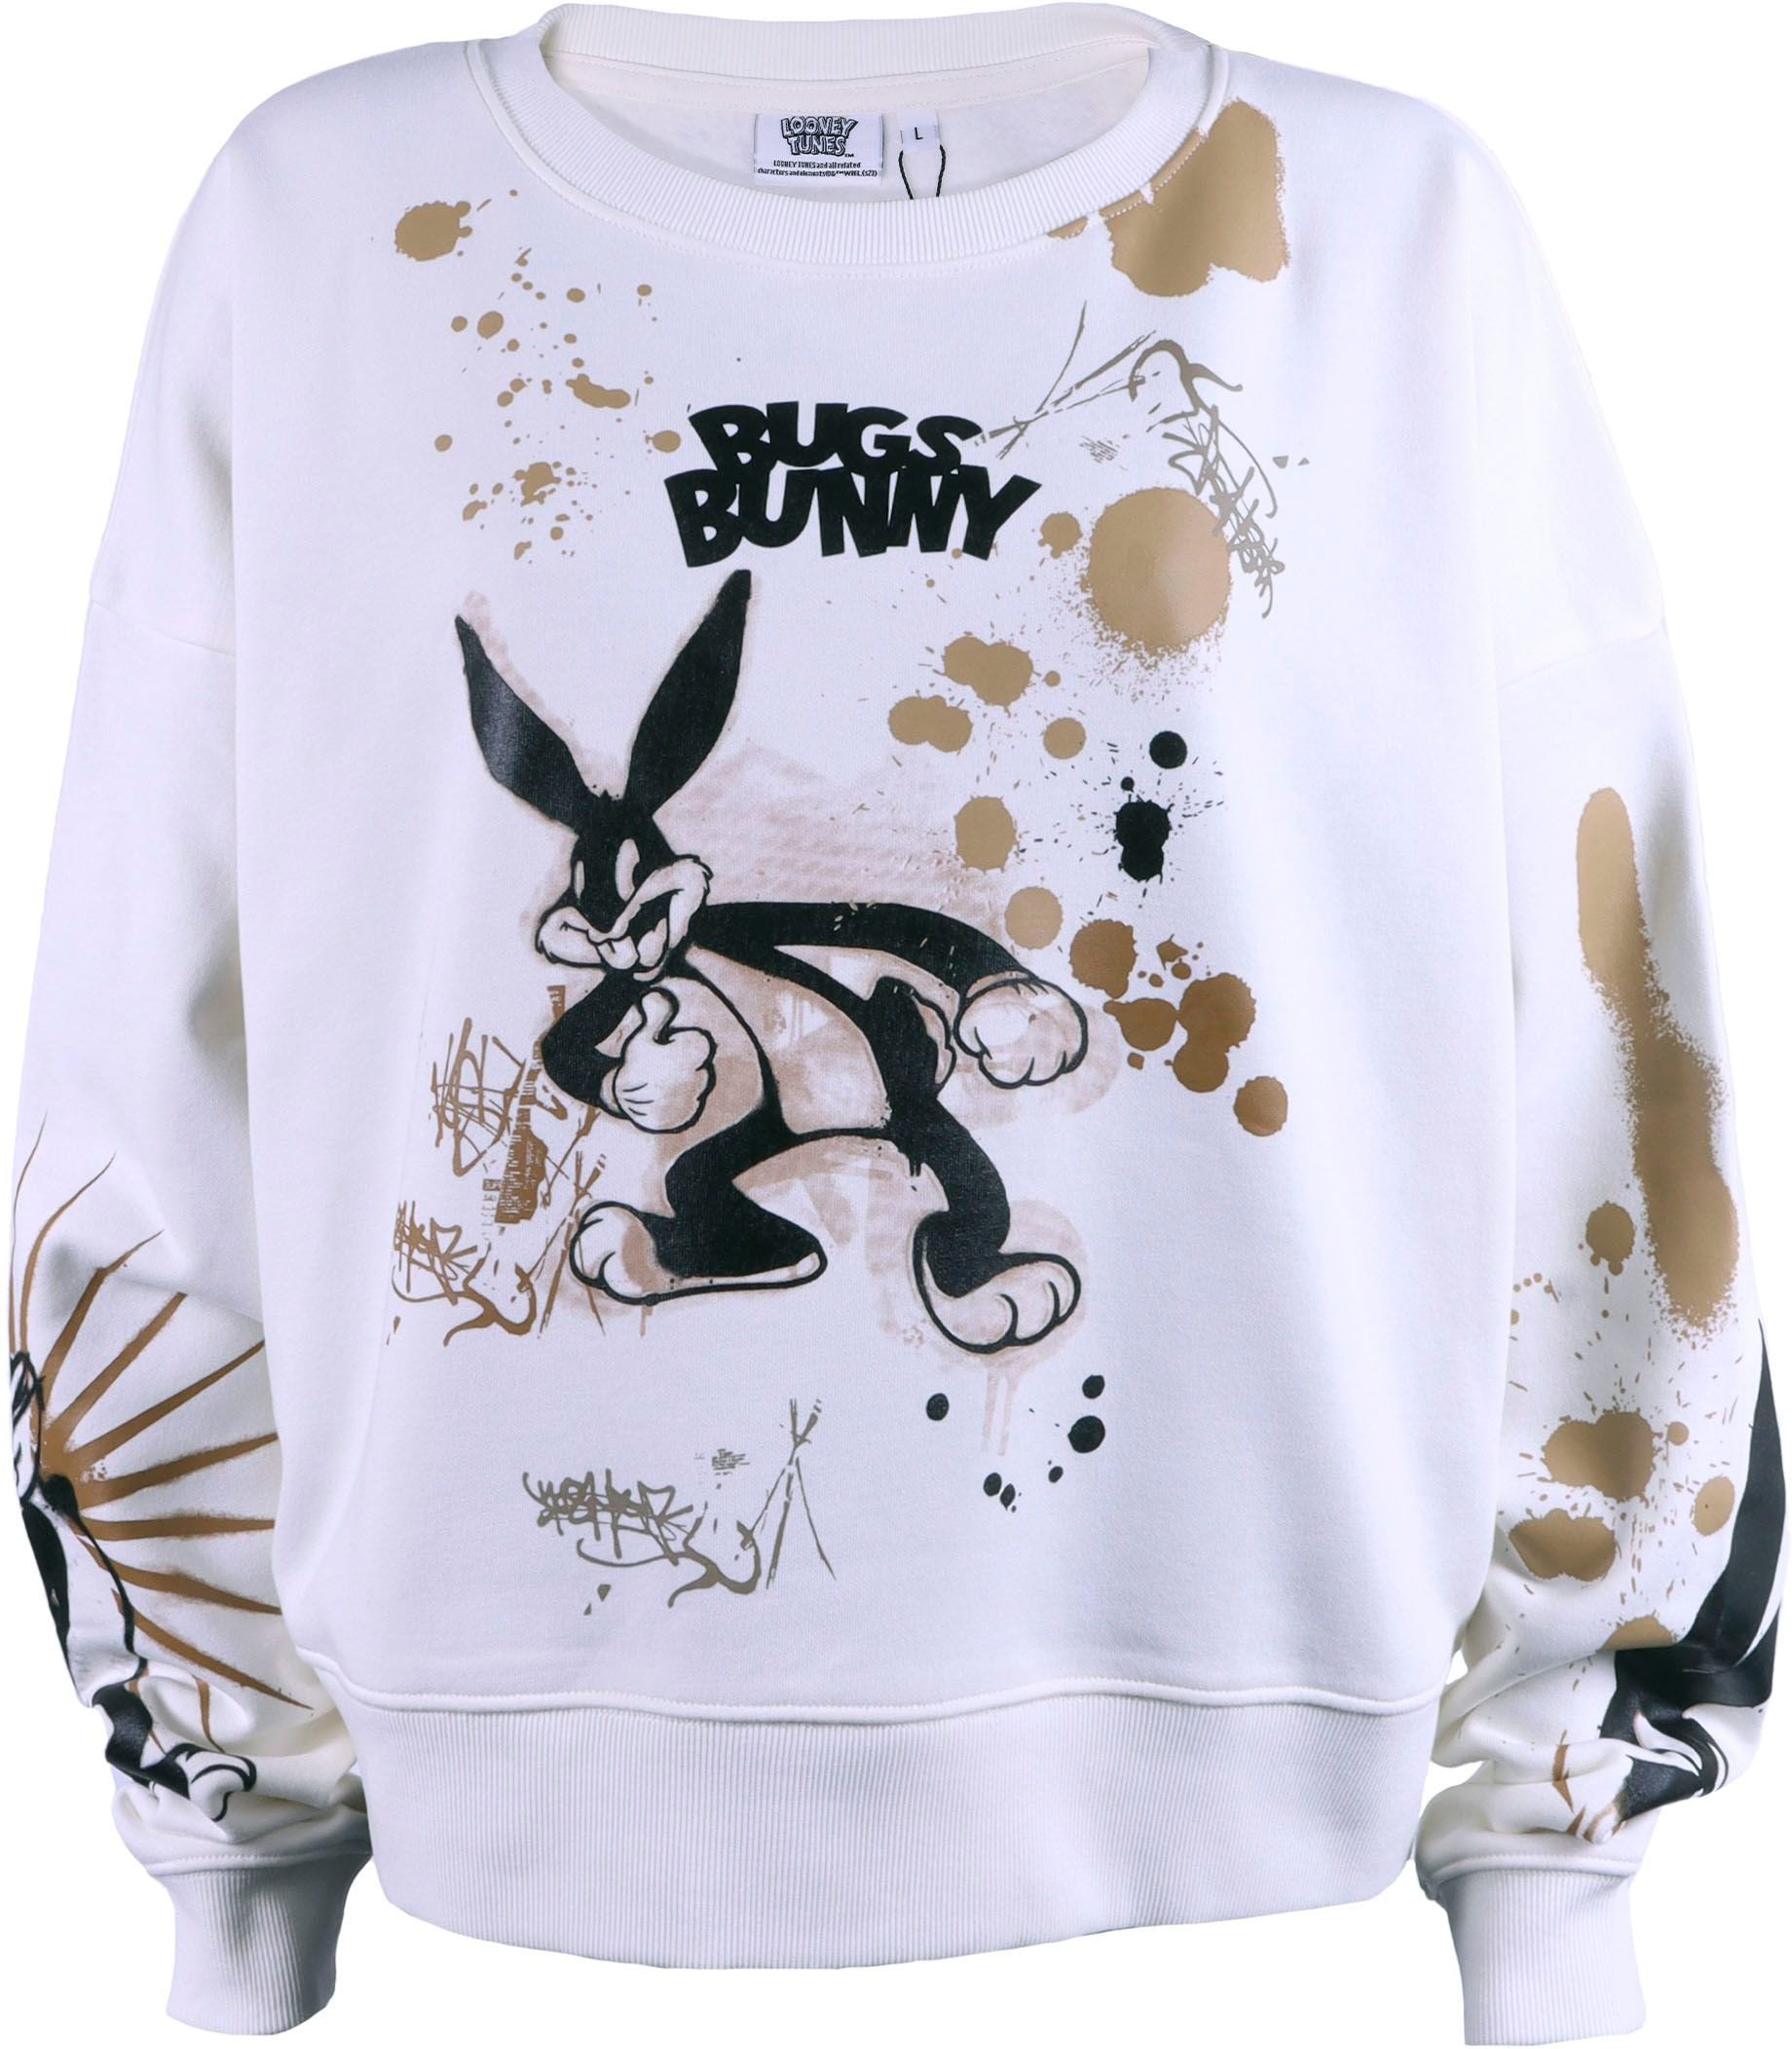 Capelli New York New »Bugs bestellen Capelli York Bunny«, Sweatshirt Sweater Oversized